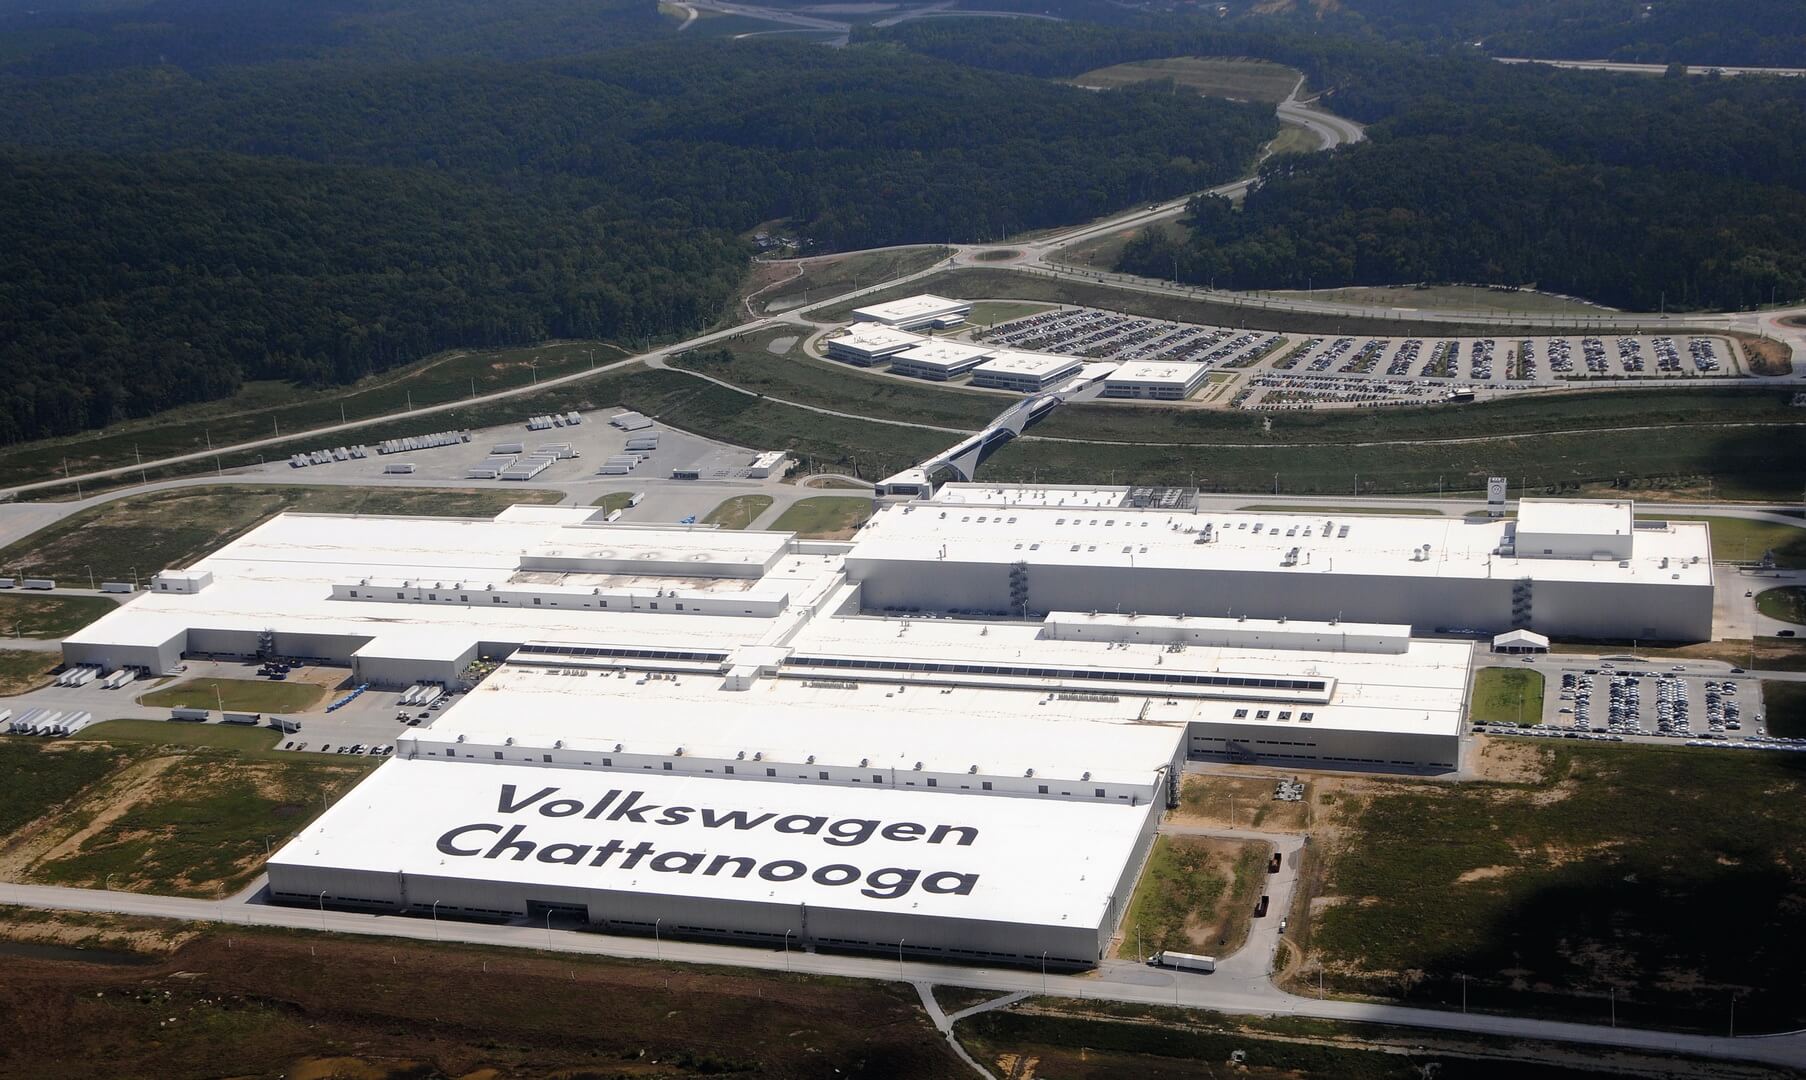 Завод Volkswagen в Чаттануге, штат Теннесси, США